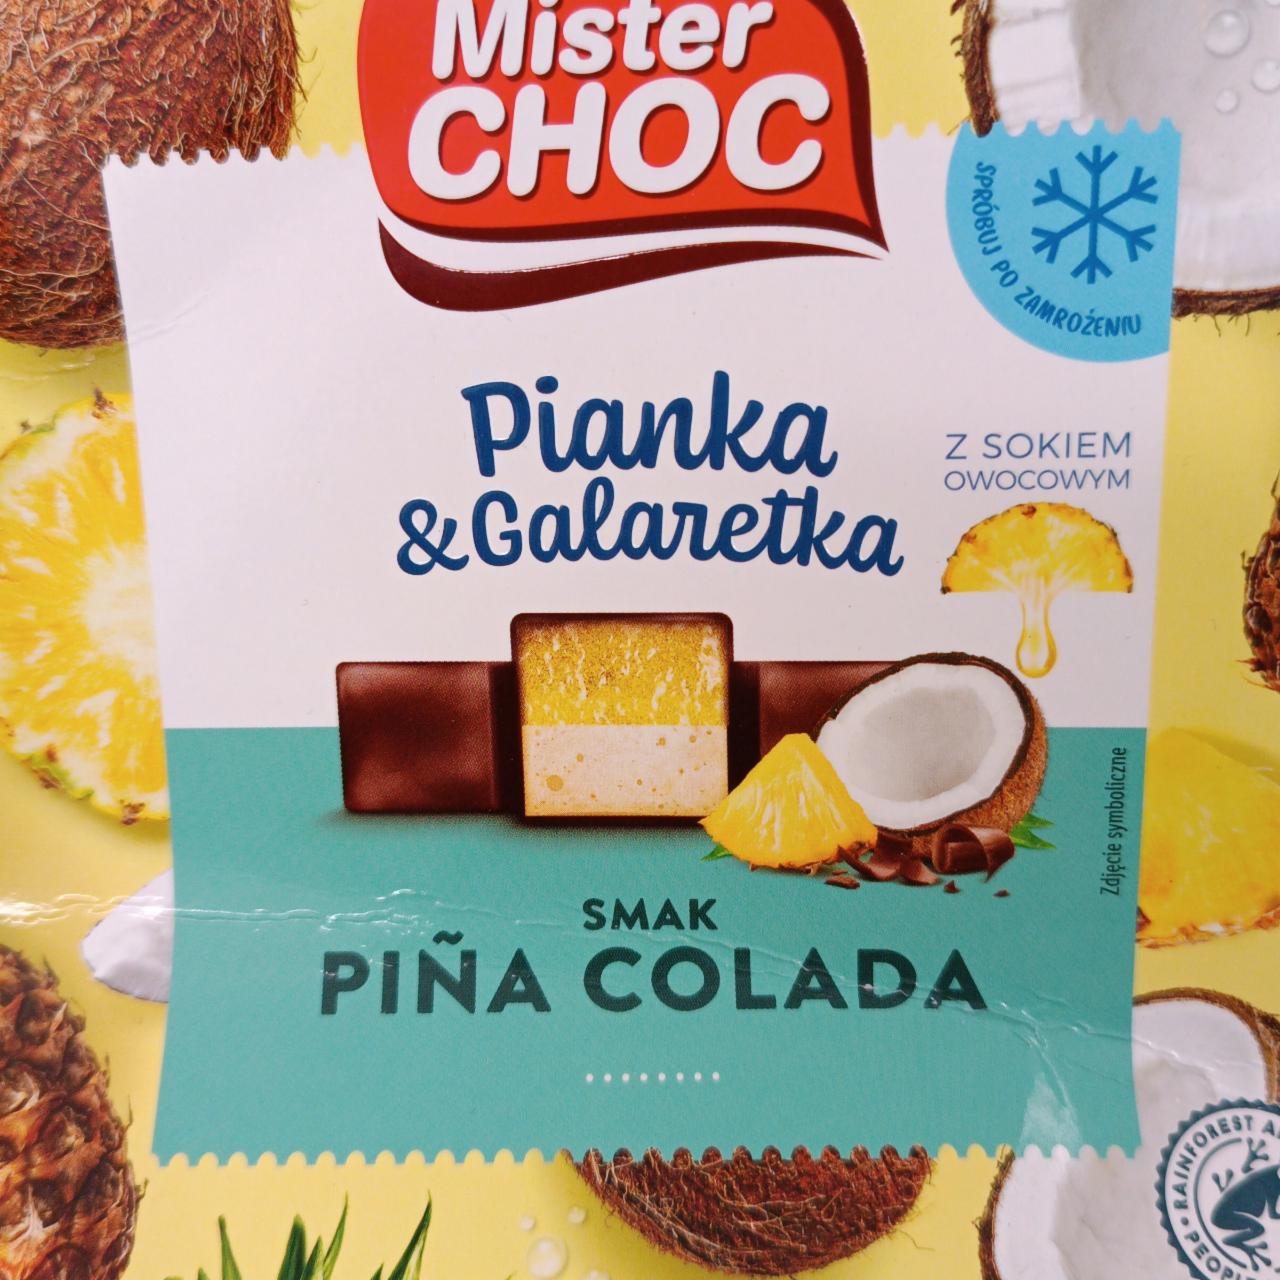 Фото - Цукерки Pianka & Galaretka Pina Colada Mister Choc